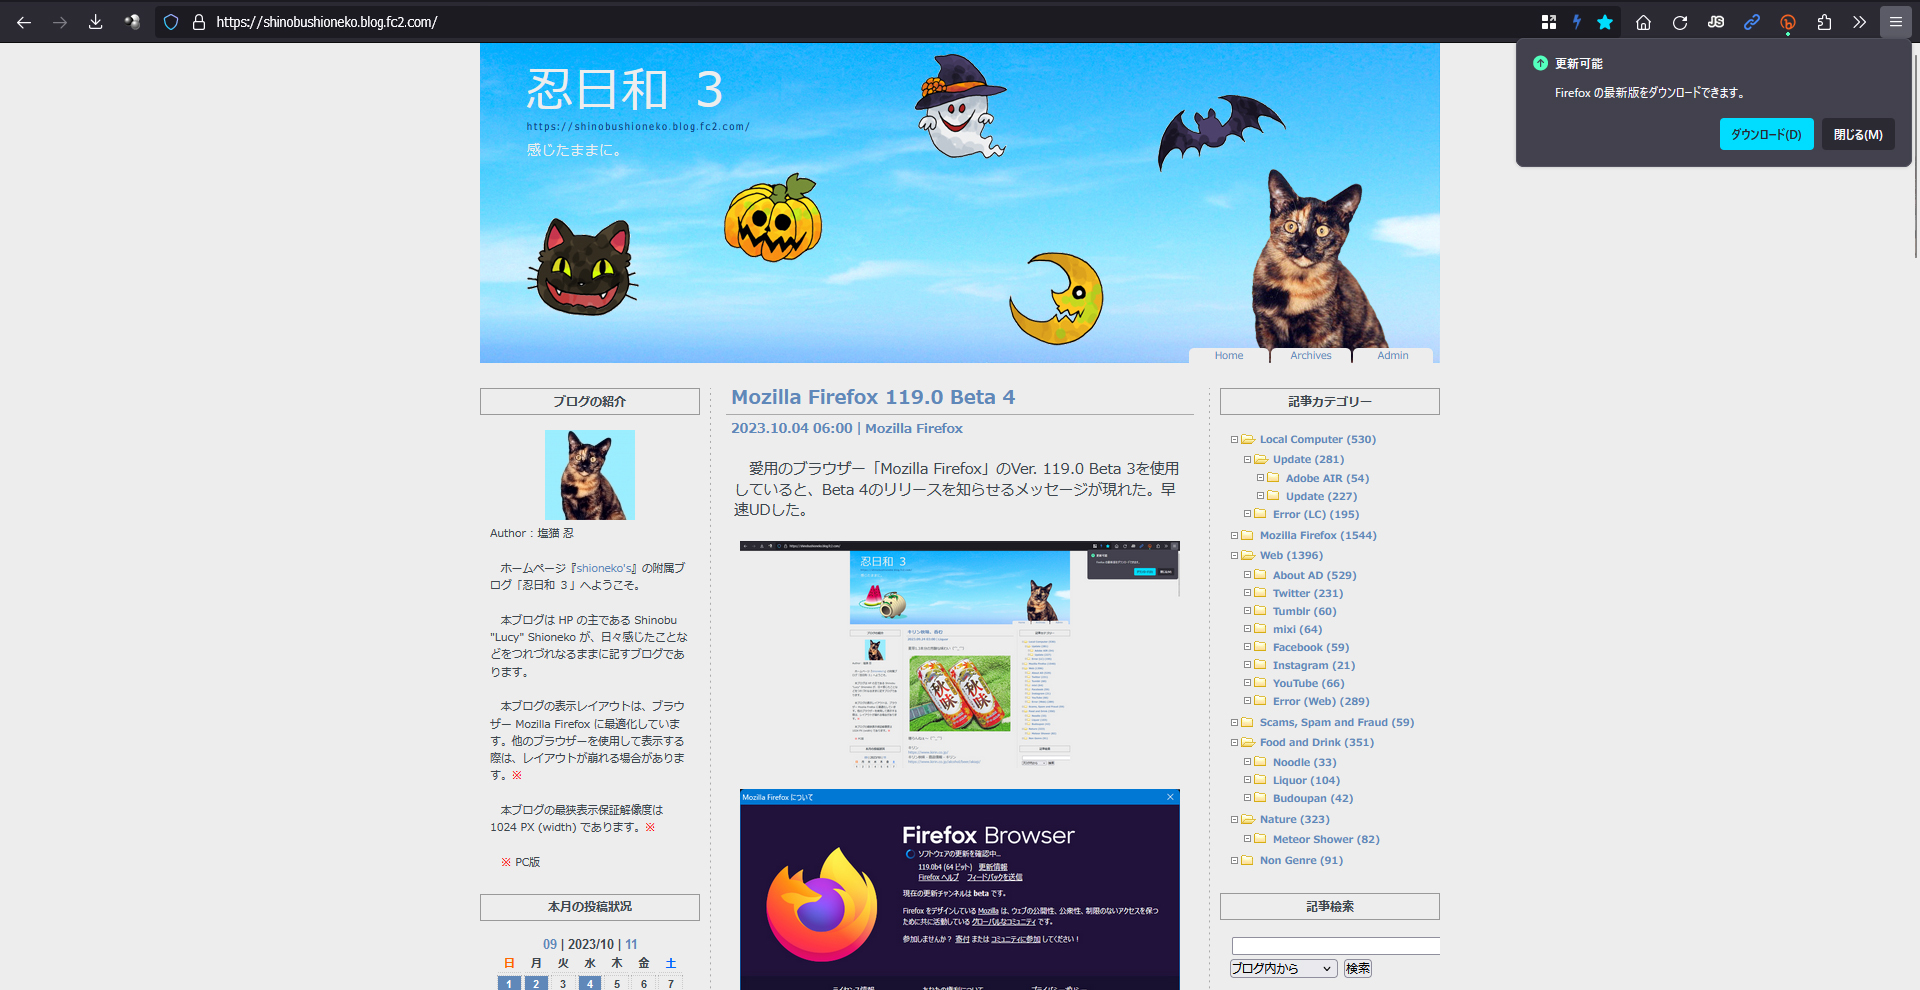 Mozilla Firefox 119.0 Beta 6